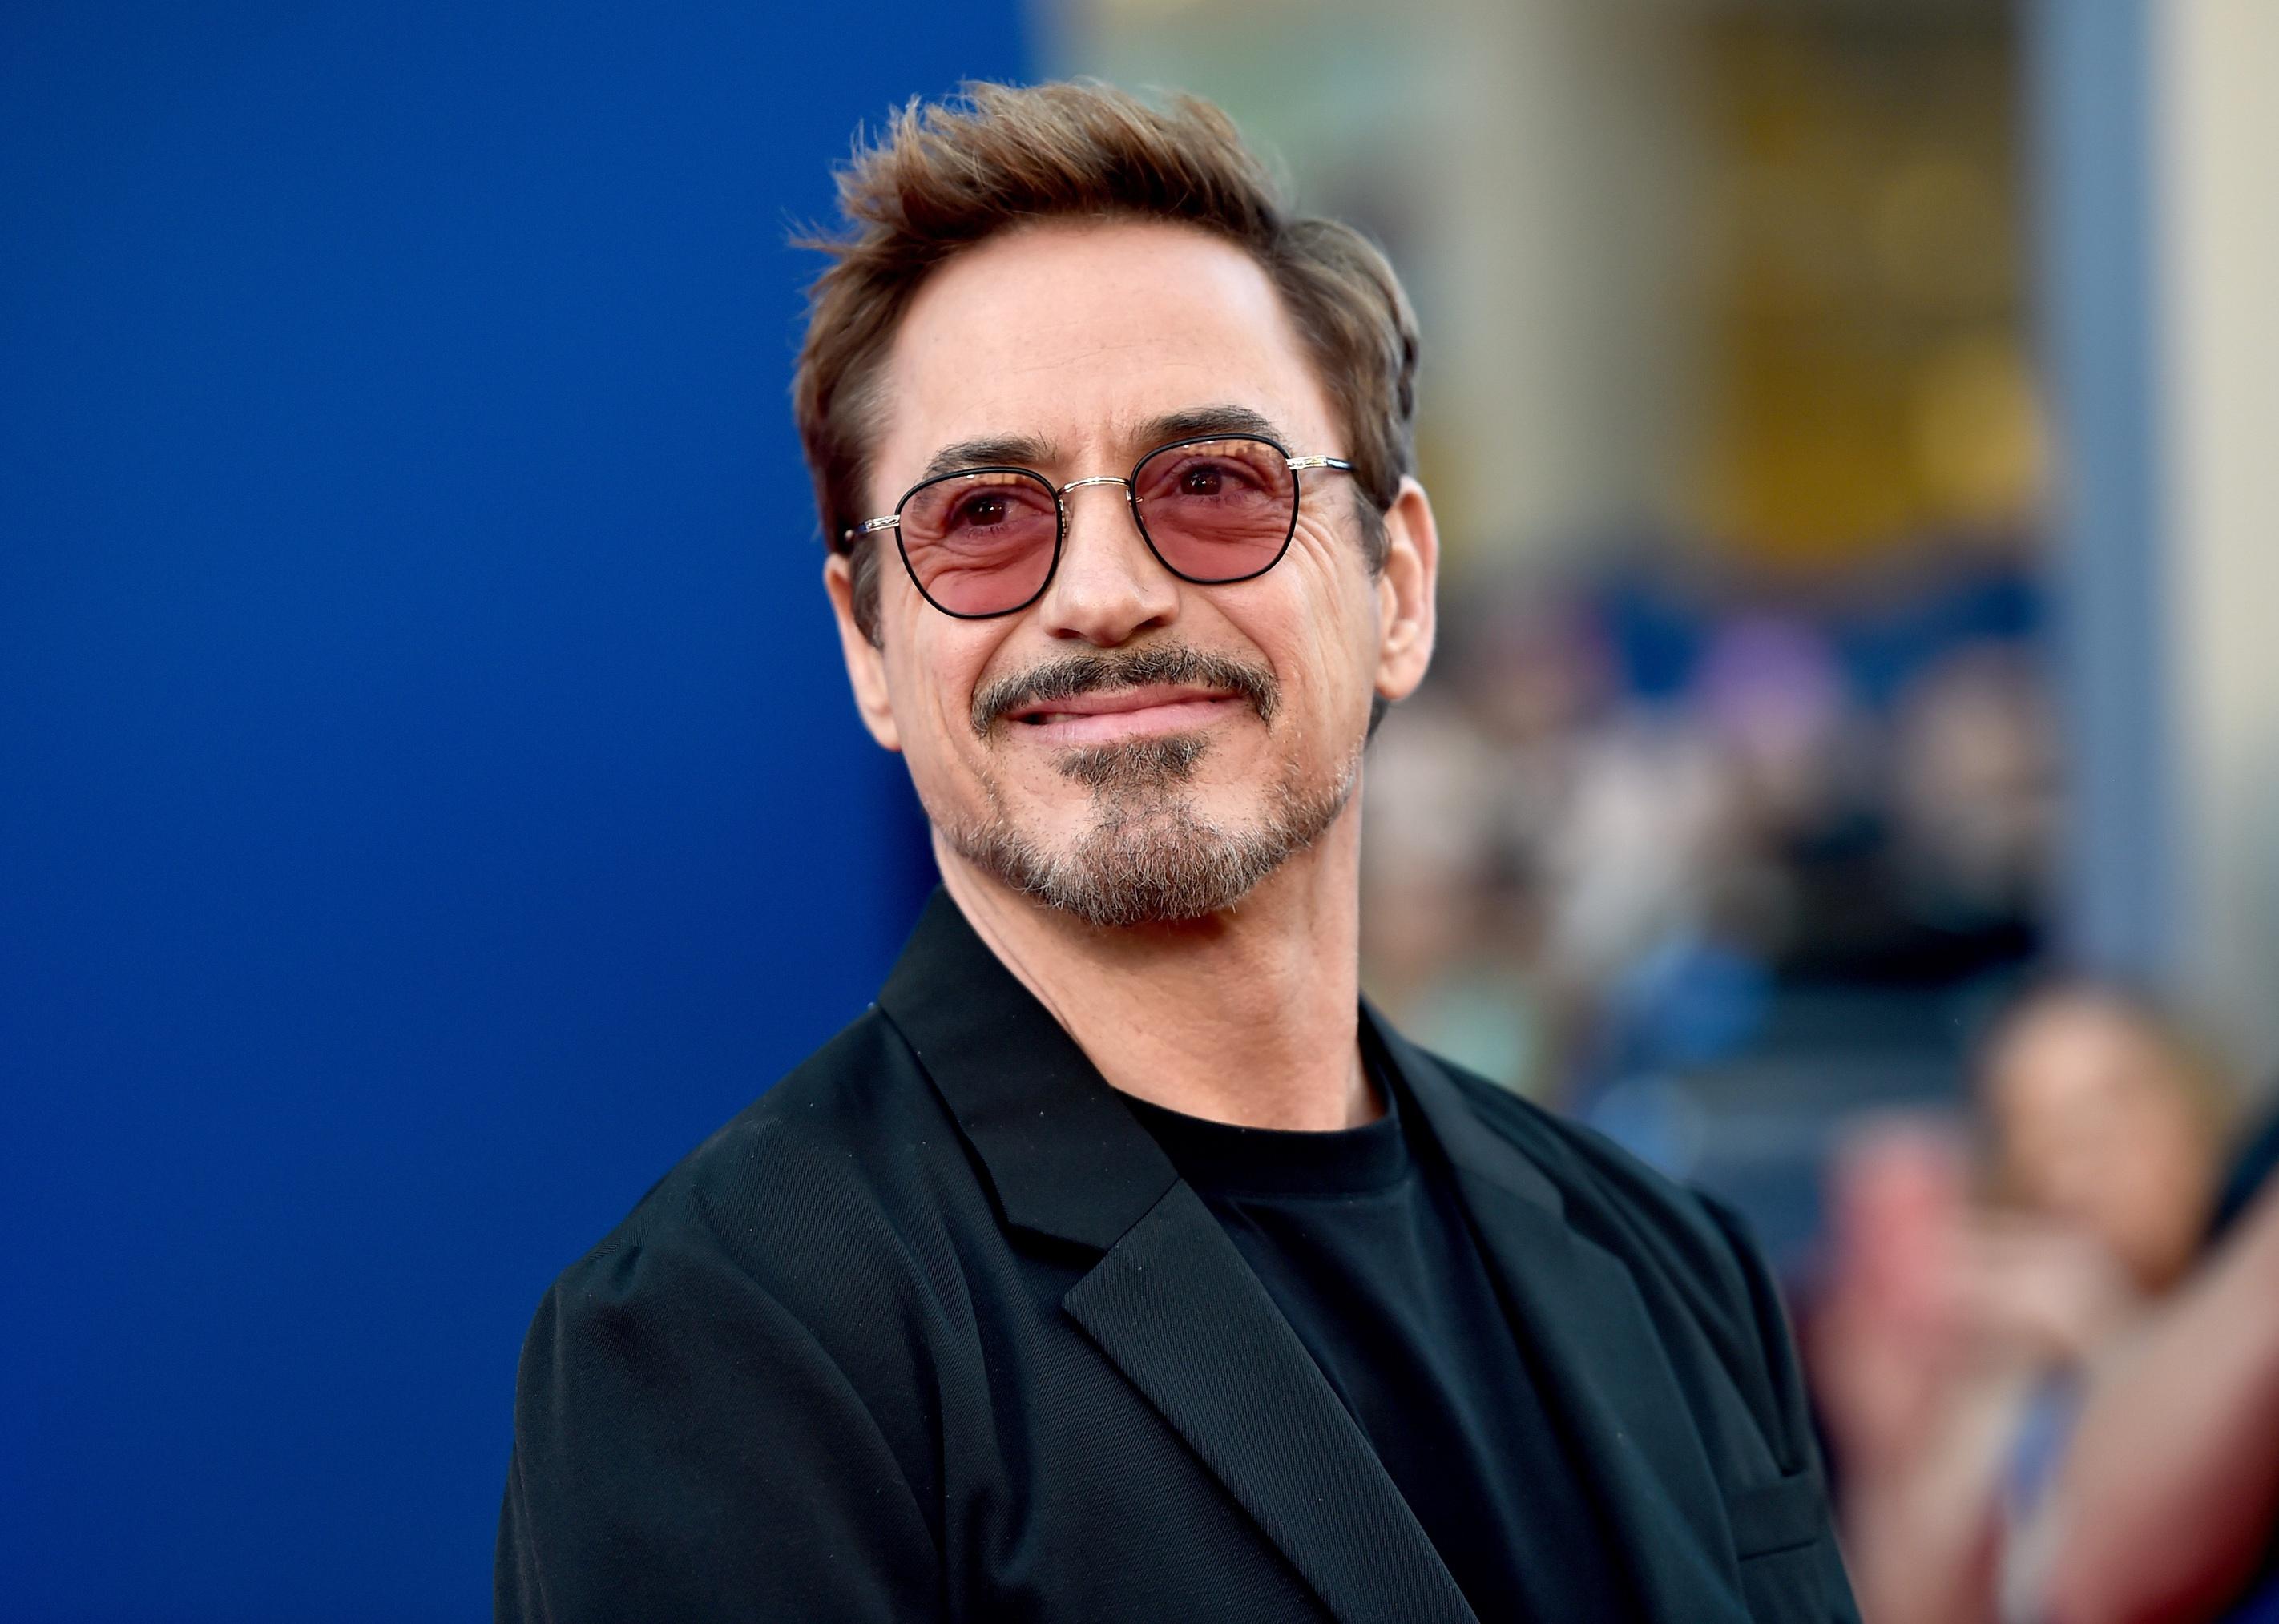 Robert Downey Jr. in a black suit.